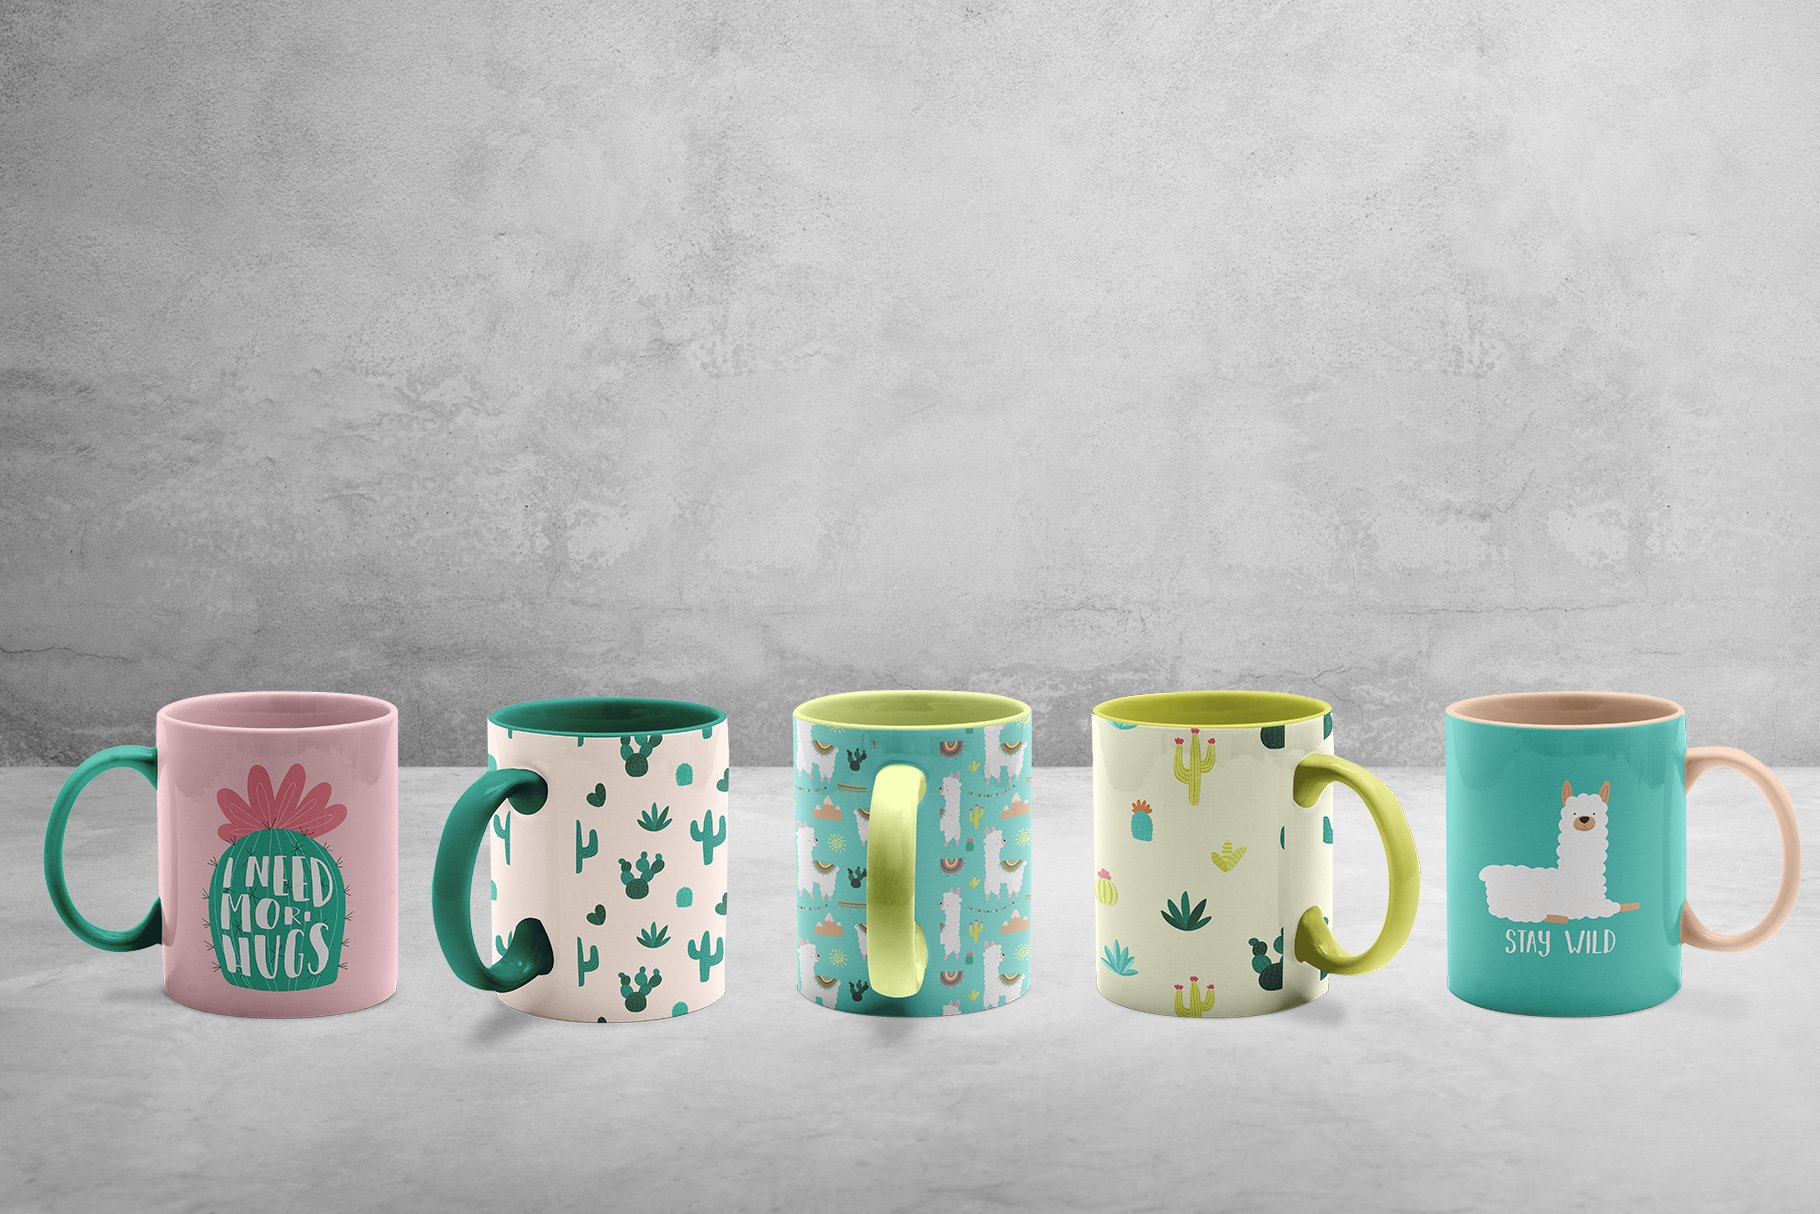 Ceramic Coffee Mugs Mockup Set